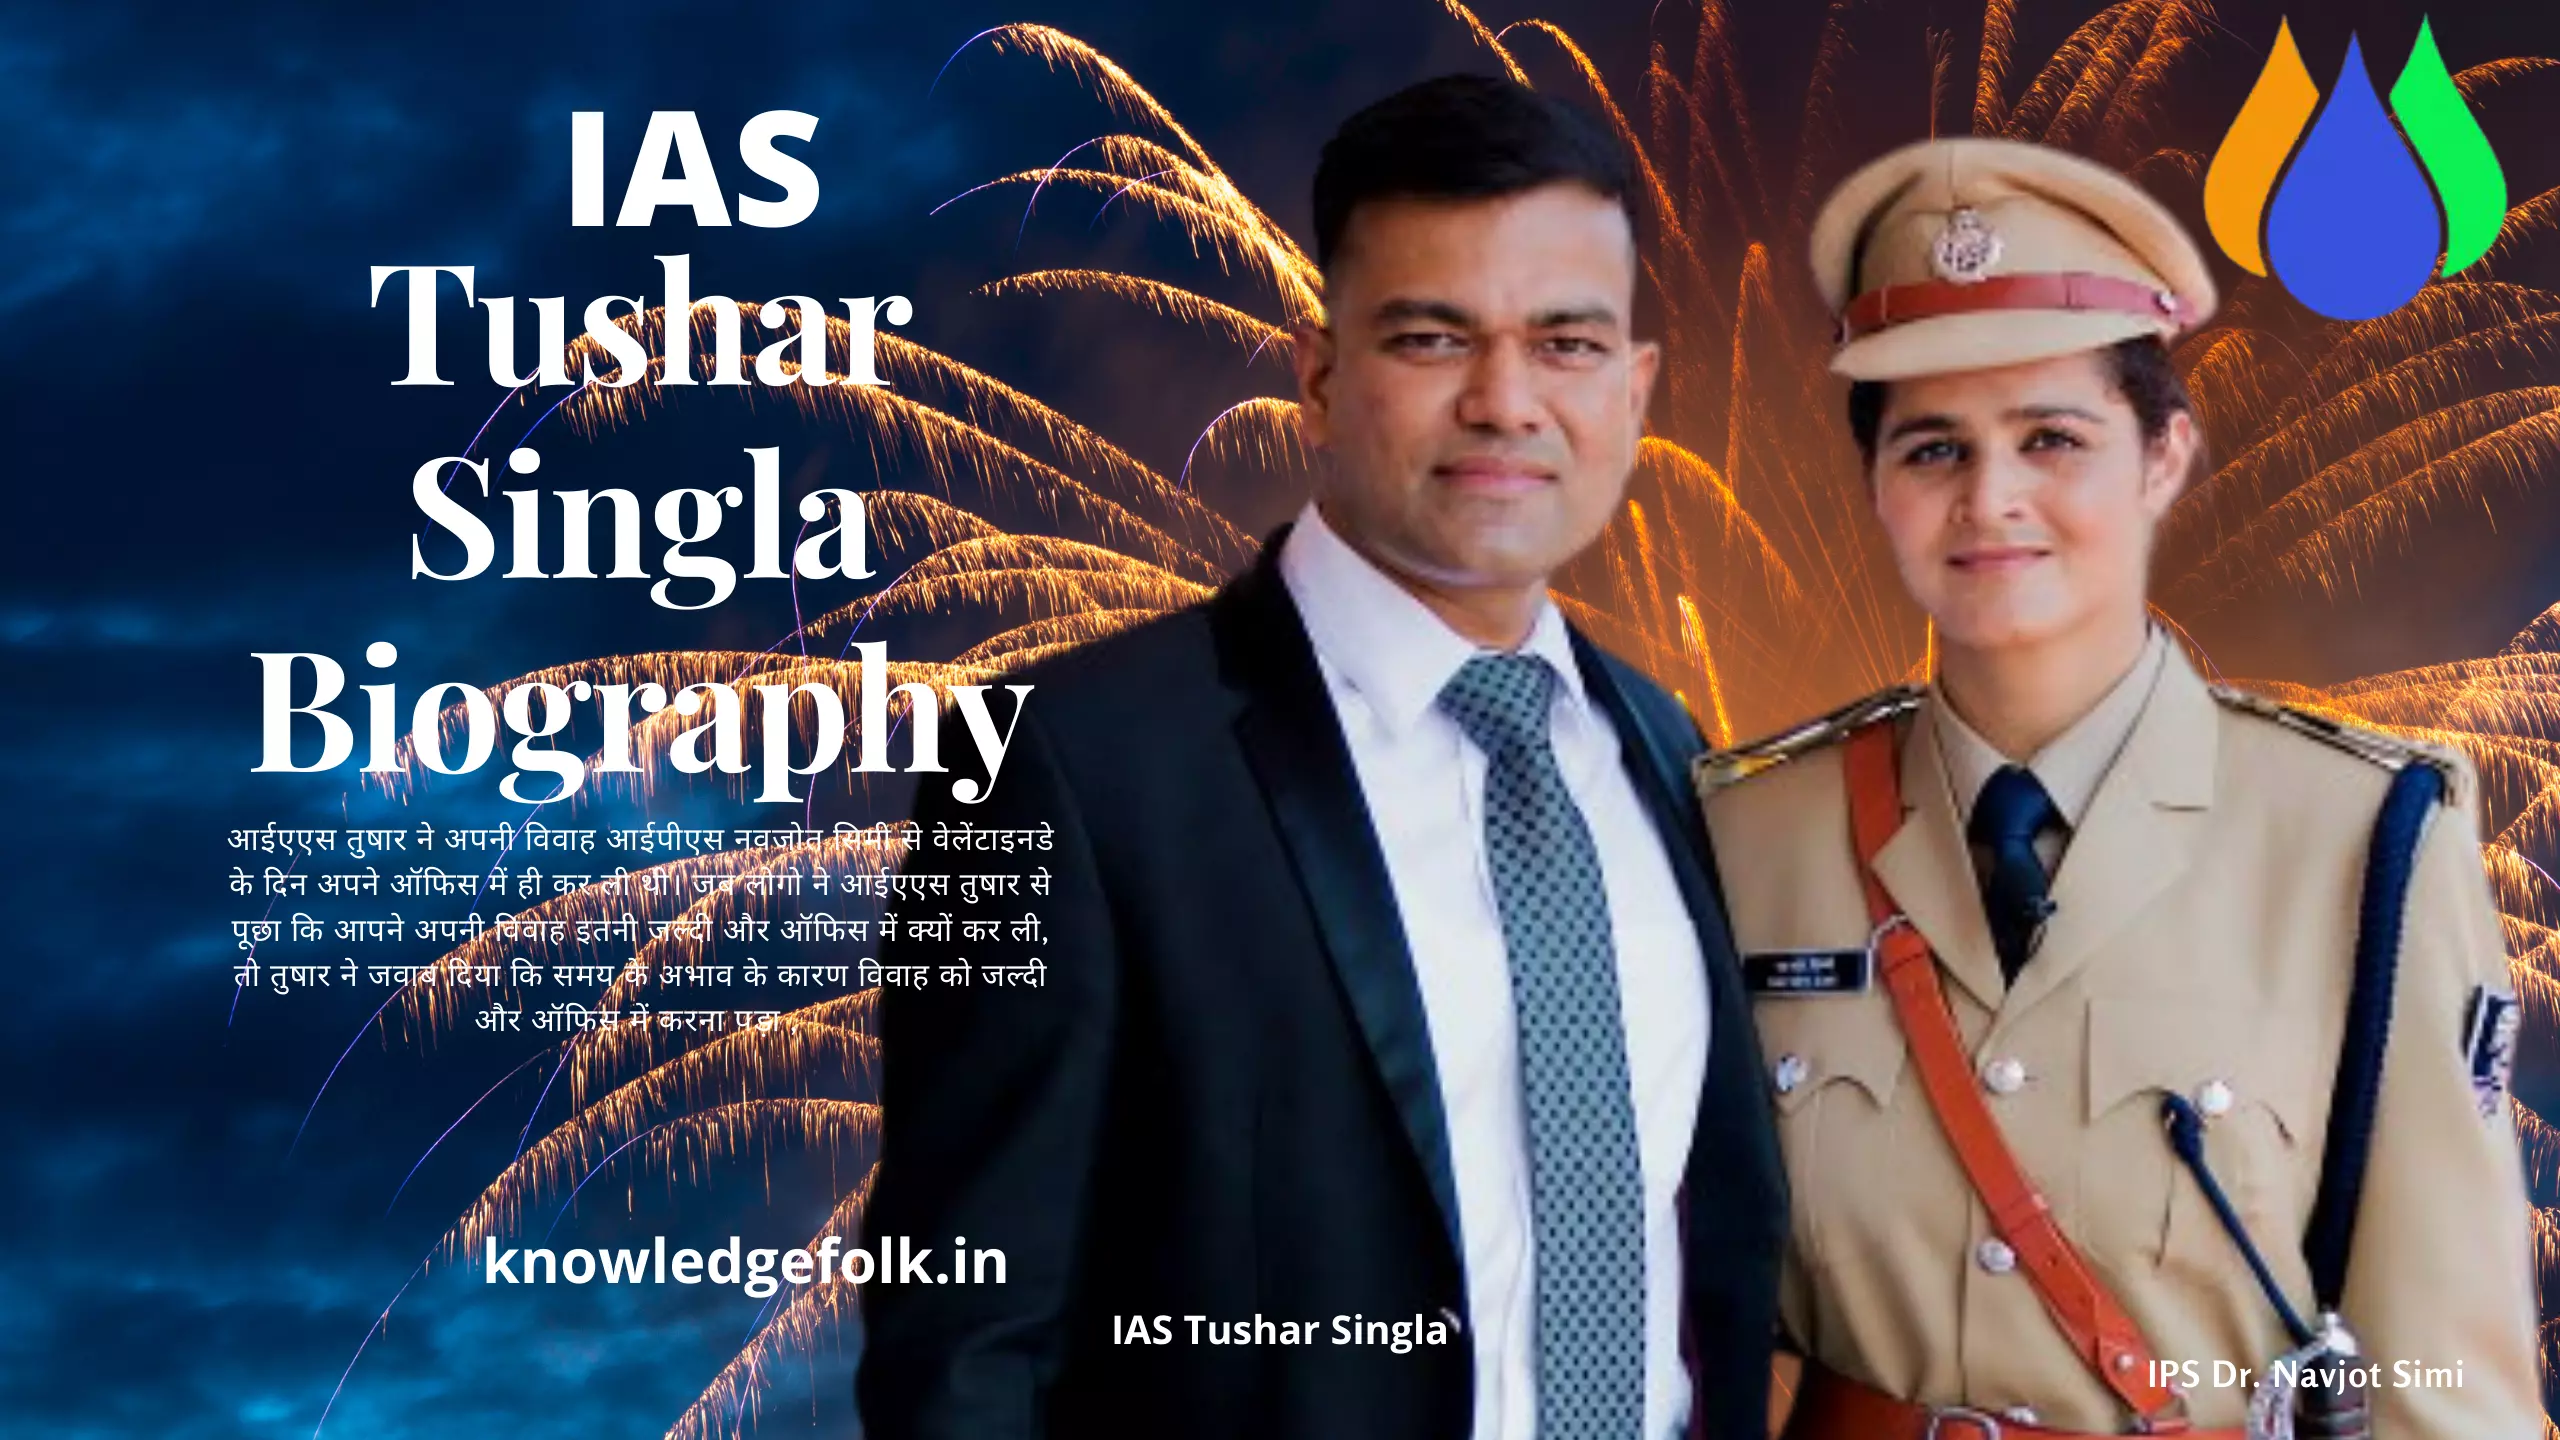 IAS Tushar Biography in Hindi (1)